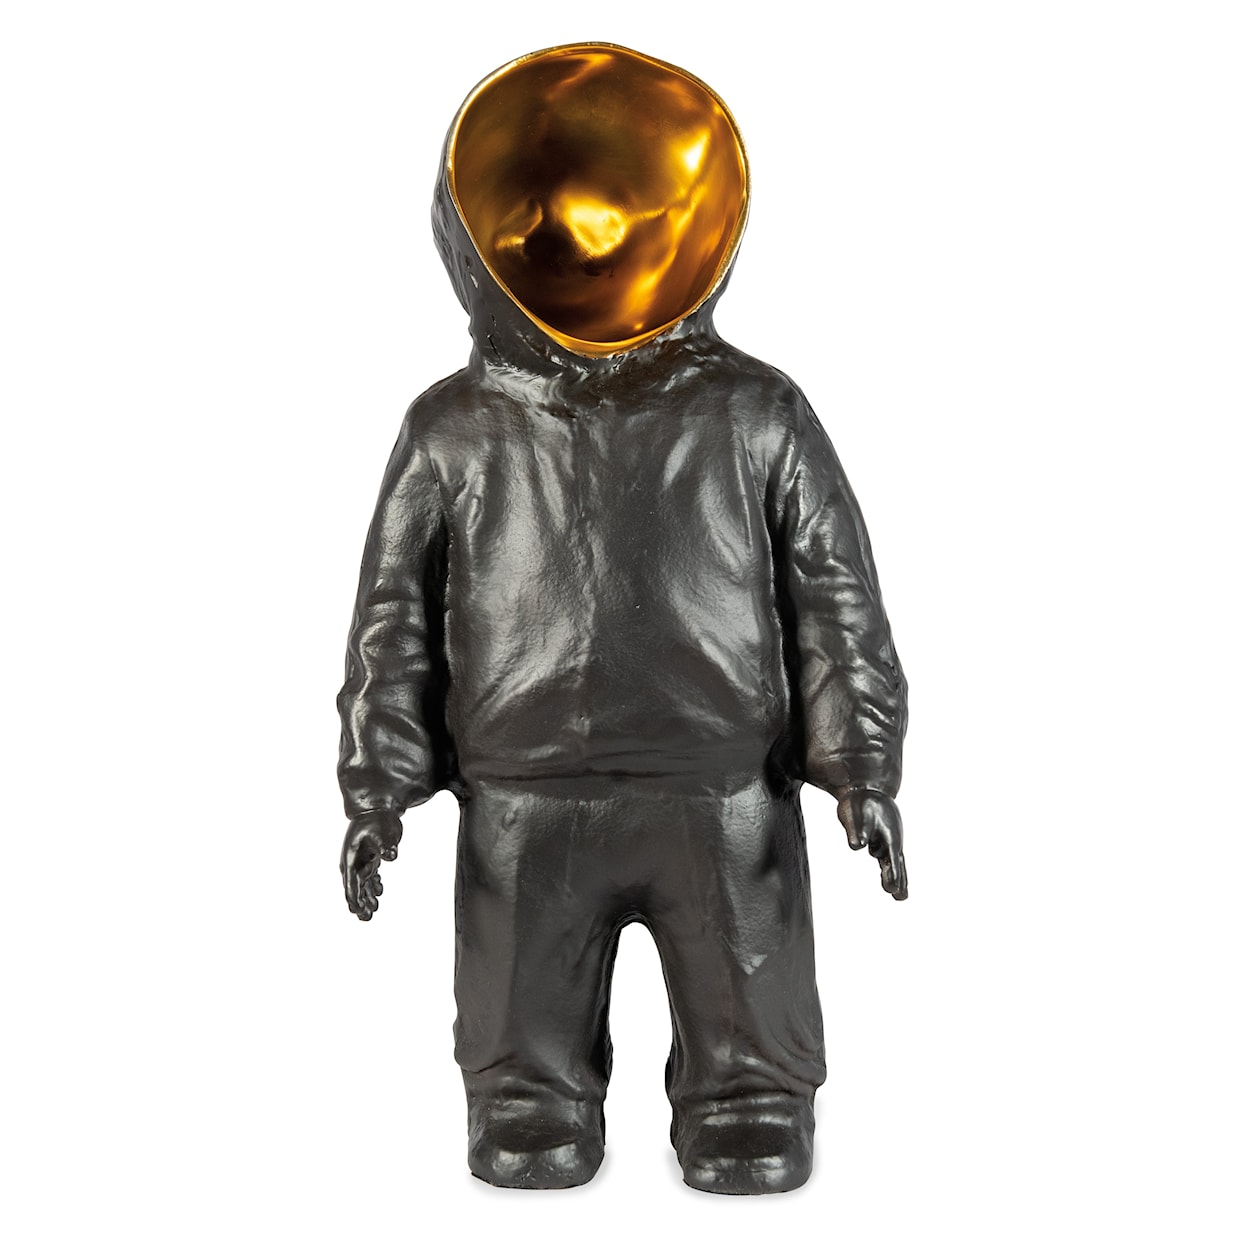 BOBO Intriguing Objects BOBO Intriguing Objects Vintage Inspired Space Astronaut Sculpture